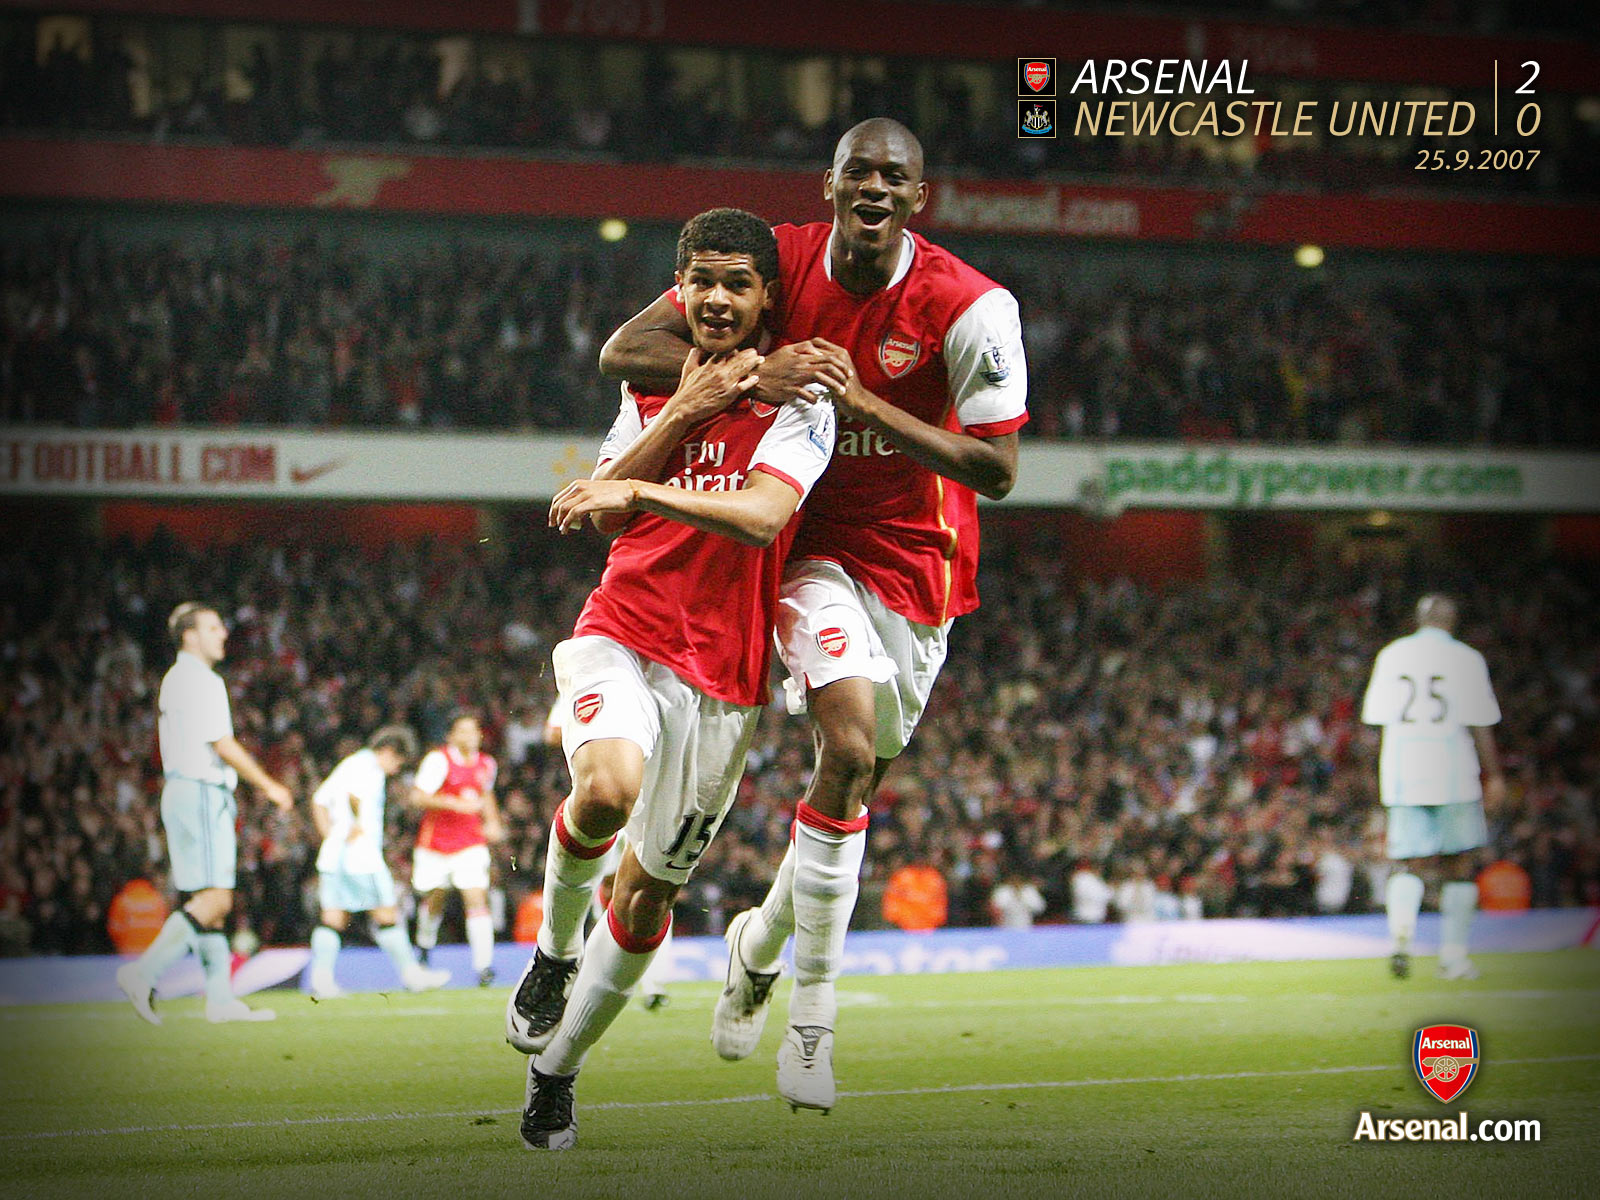 arsenal - Arsenal Wallpaper (340825) - Fanpop